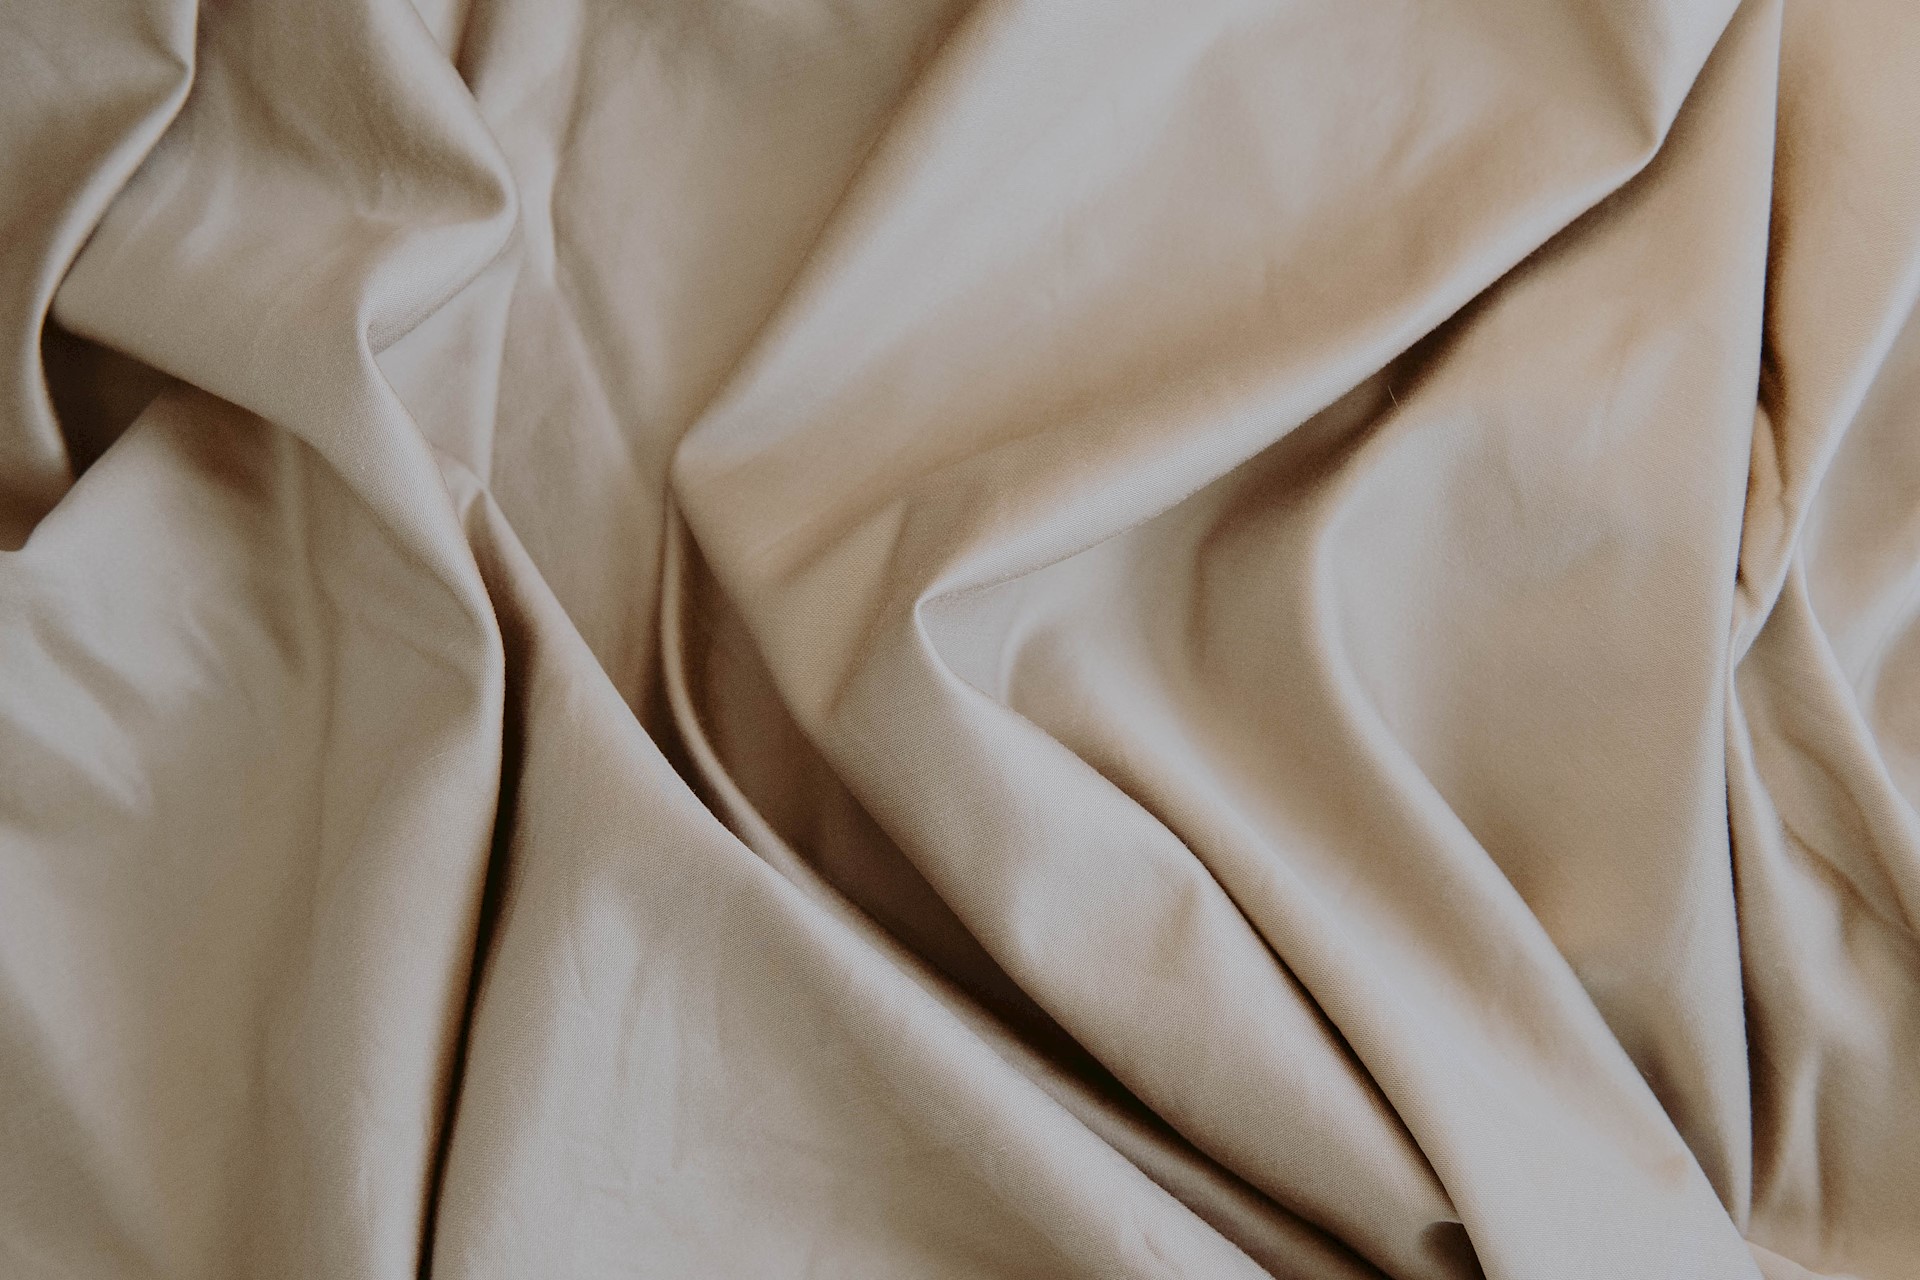 Pillow talk: Choosing the perfect sheets